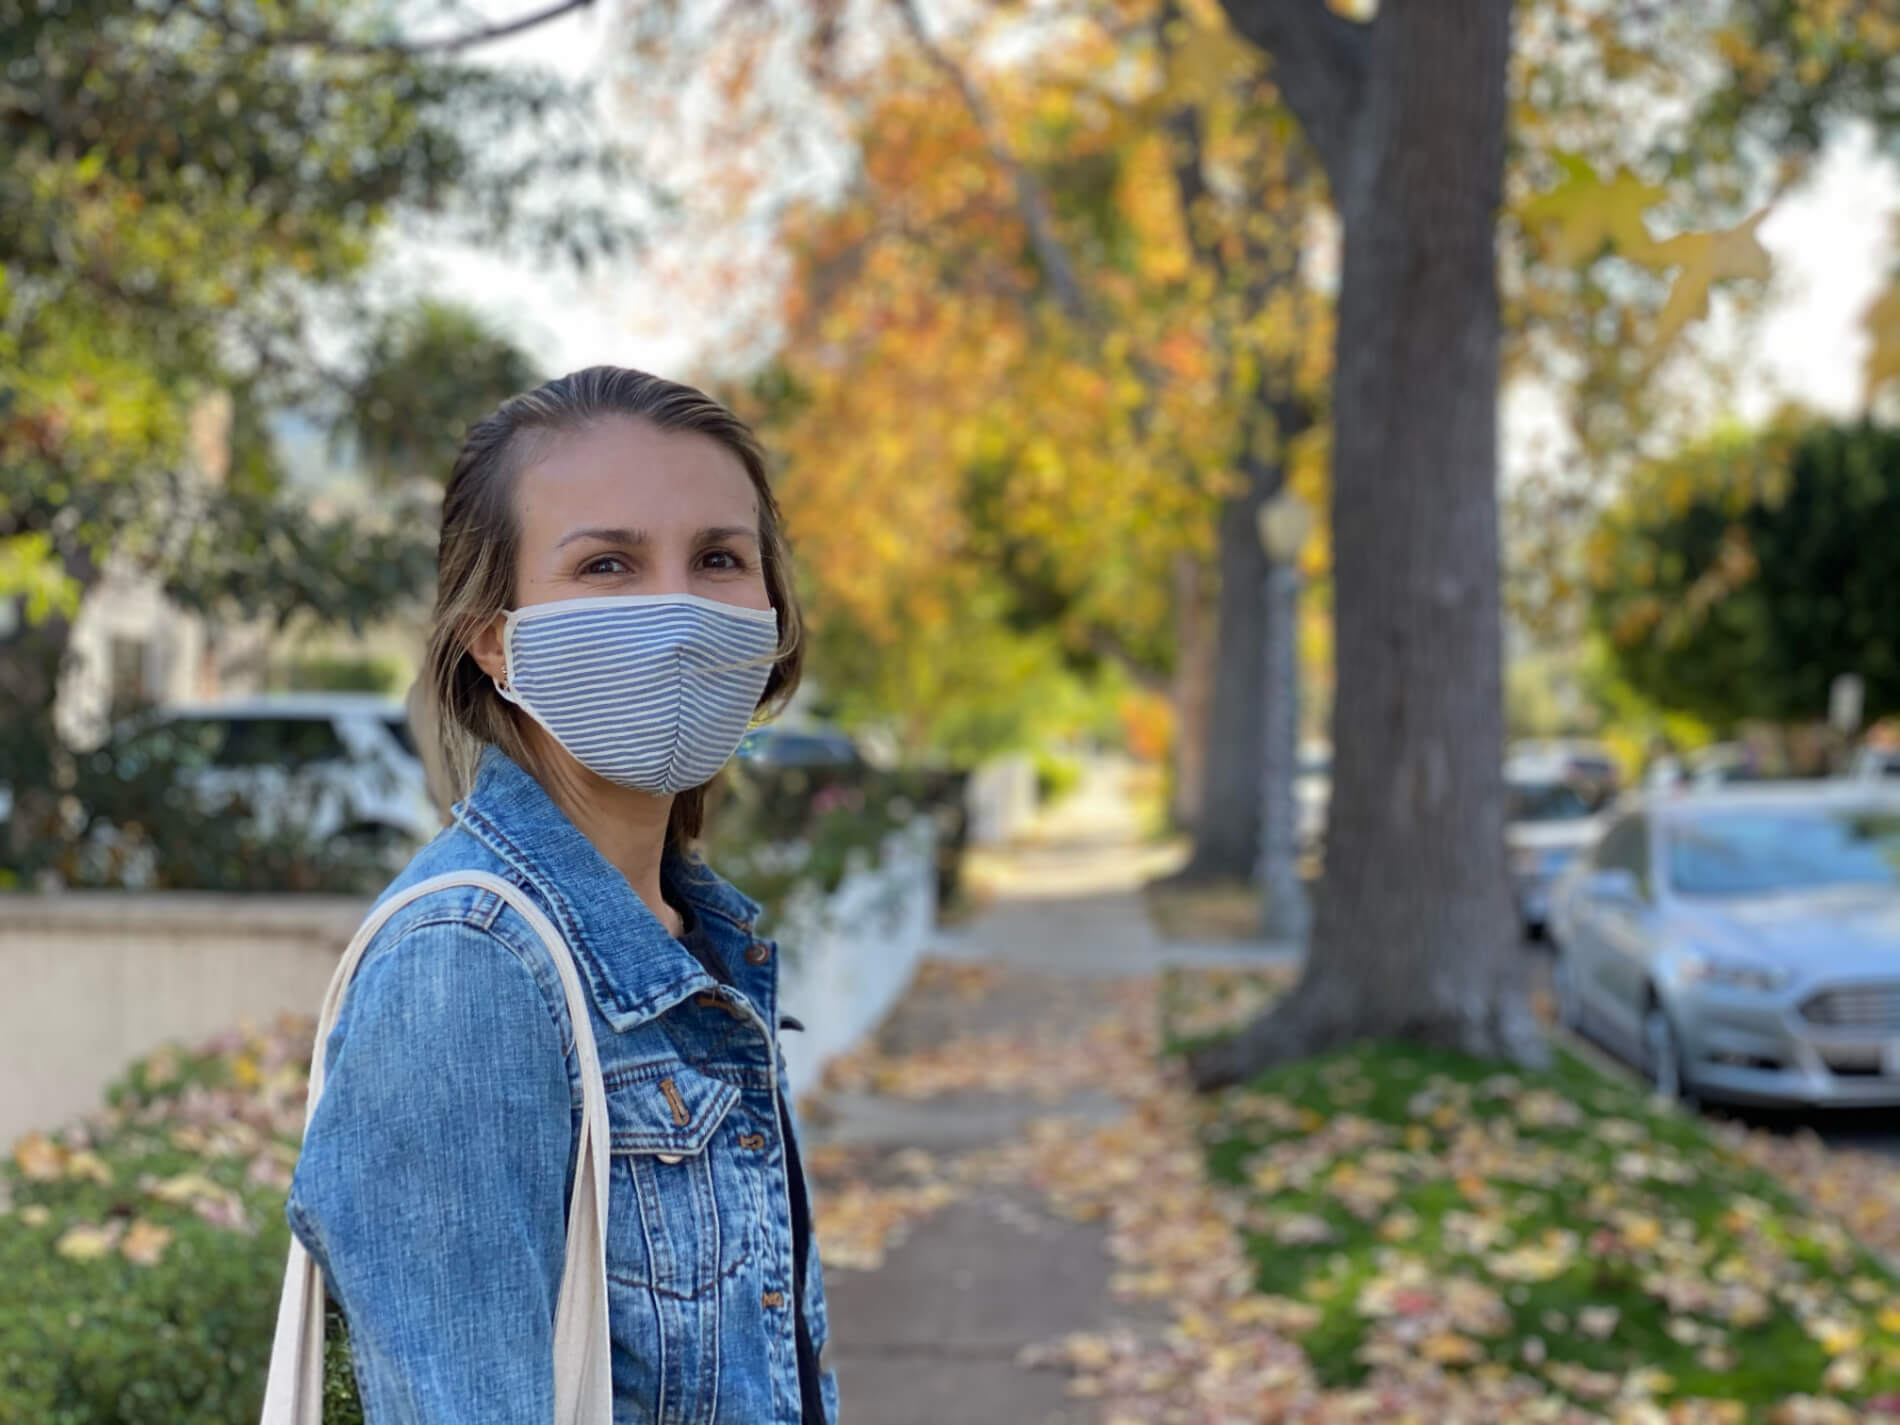 Marika Price wearing a face mask posing on a sidewalk during an autumn walk in quarantine